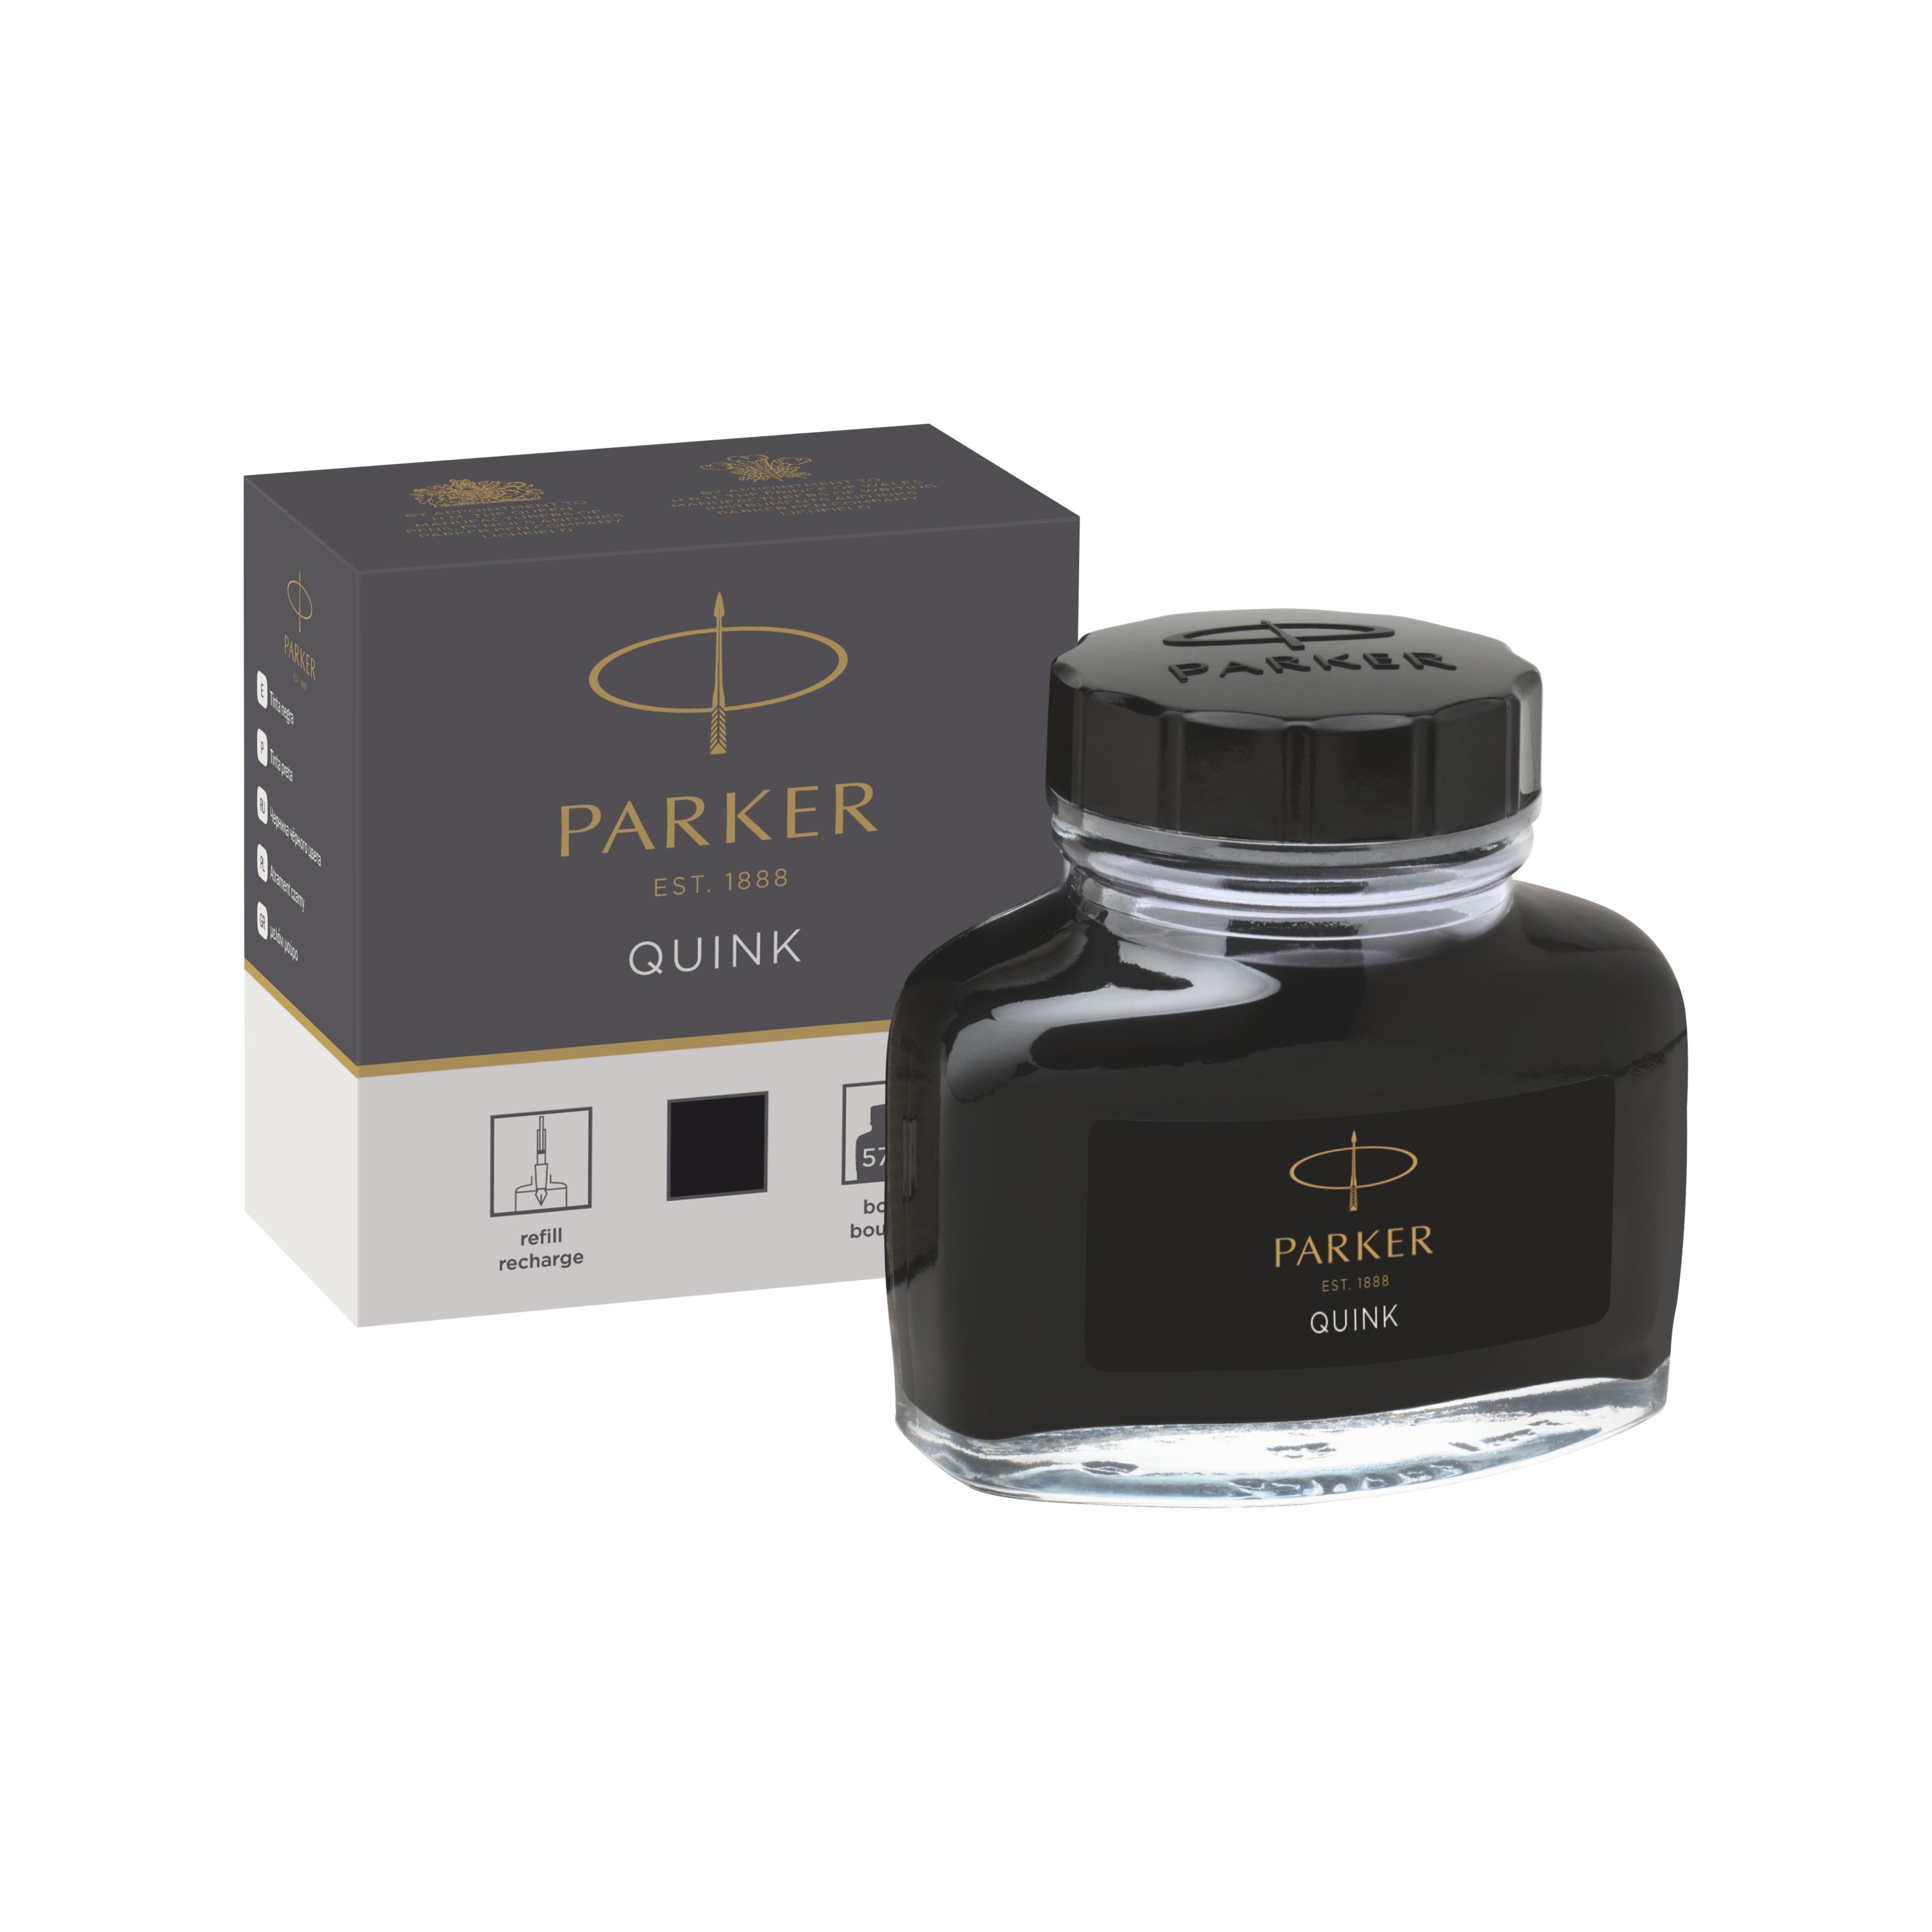 Parker Quink Ink Bottle 57ml - Pencraft the boutique